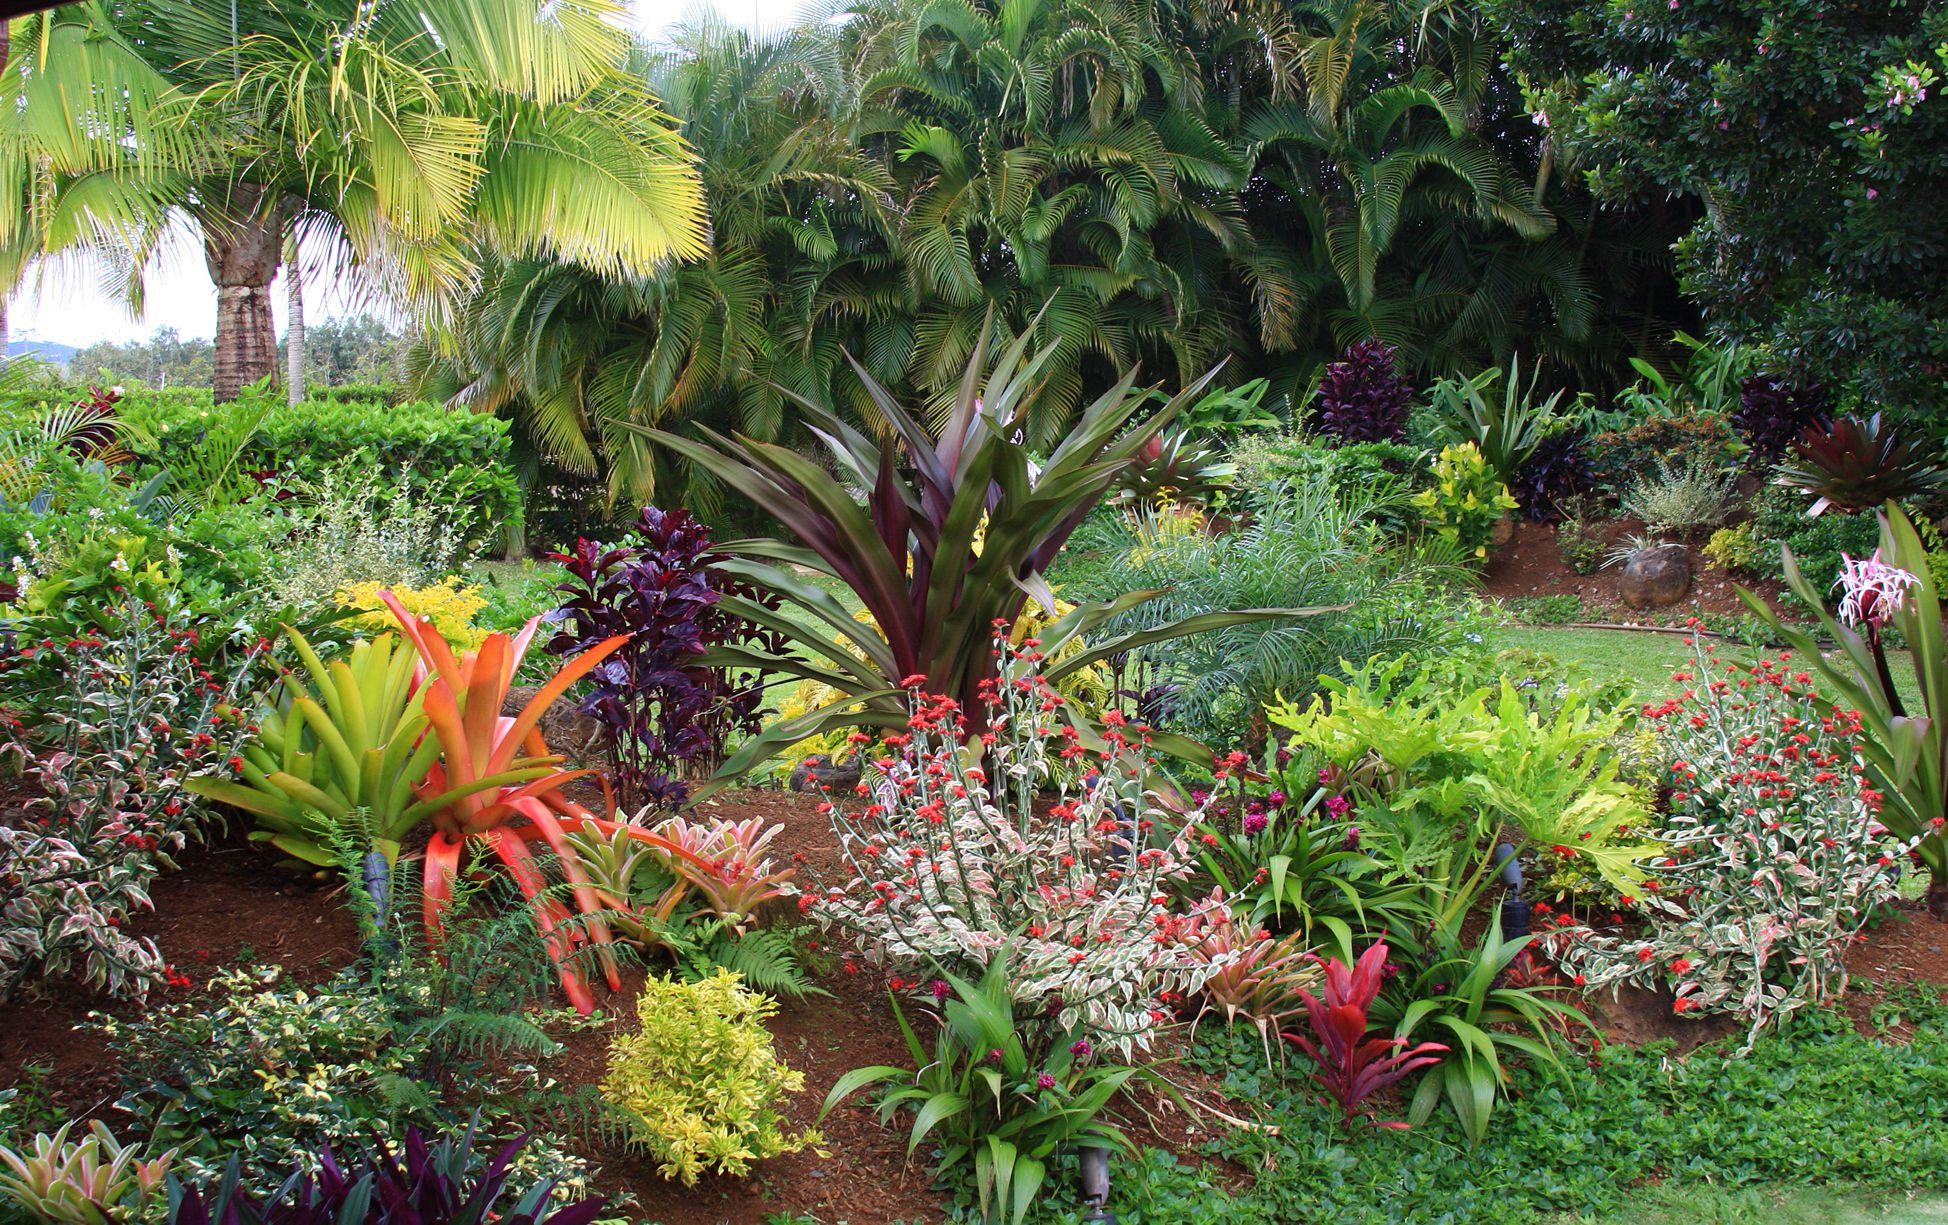 Best ideas about Tropical Garden Ideas
. Save or Pin Tropical Flower Garden Design Ideas Now.